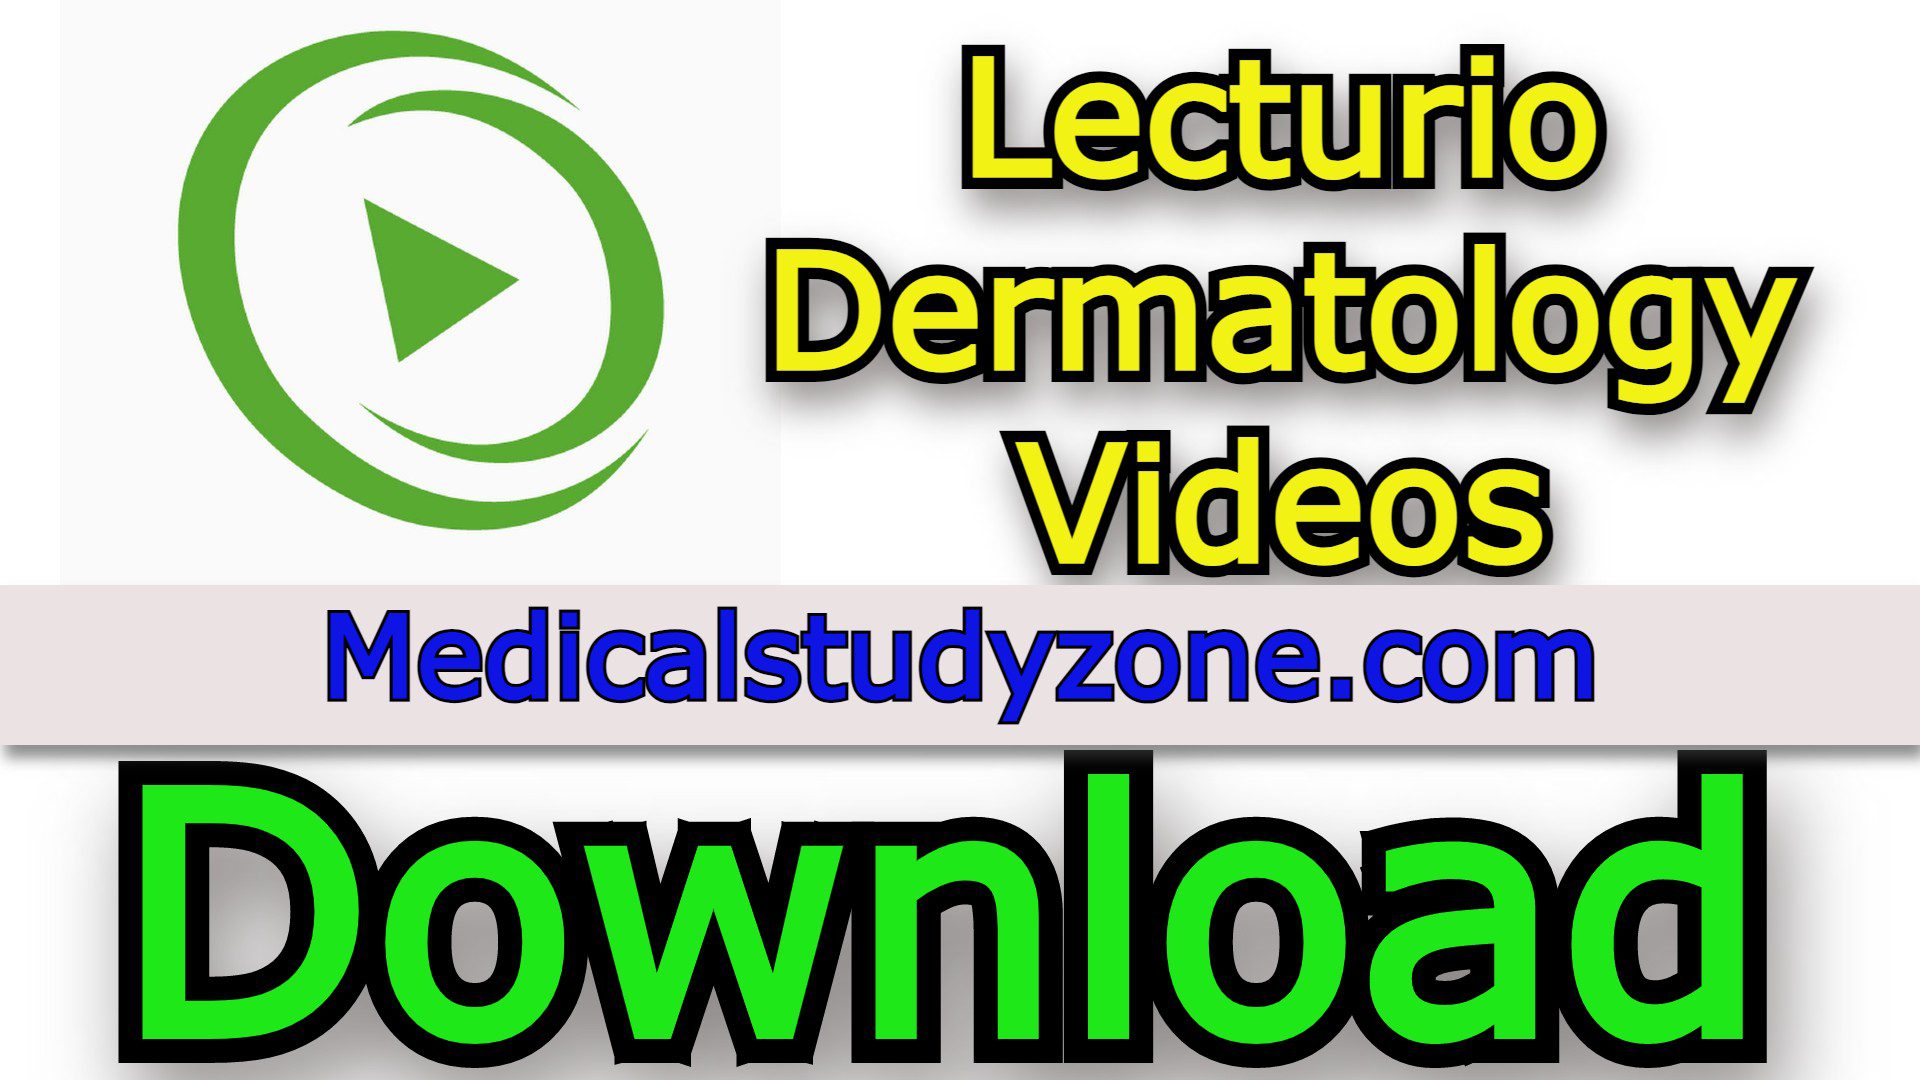 Lecturio Dermatology Videos 2022 Free Download